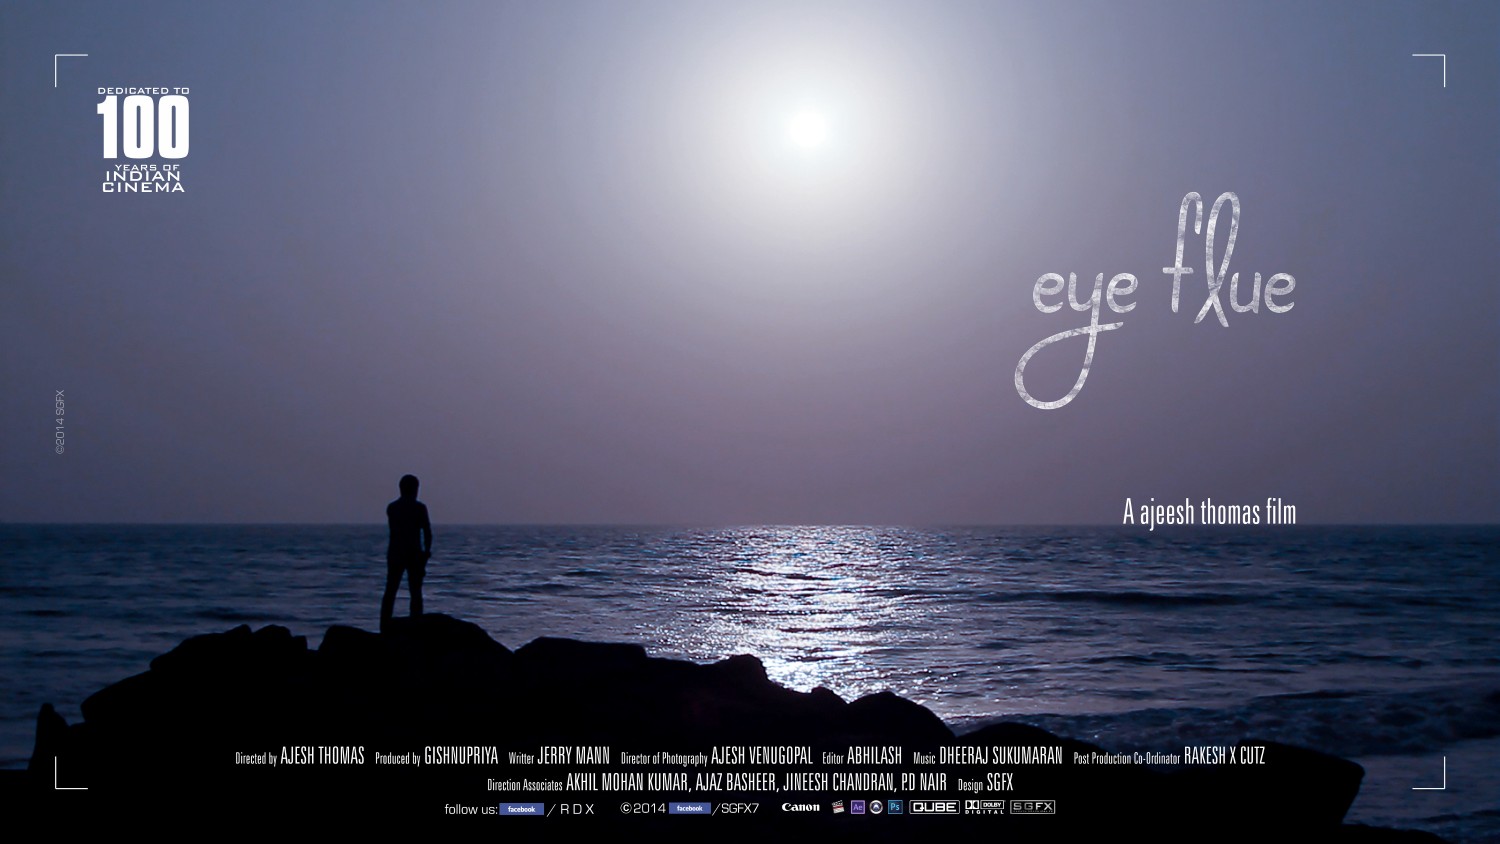 Extra Large Movie Poster Image for eye flue